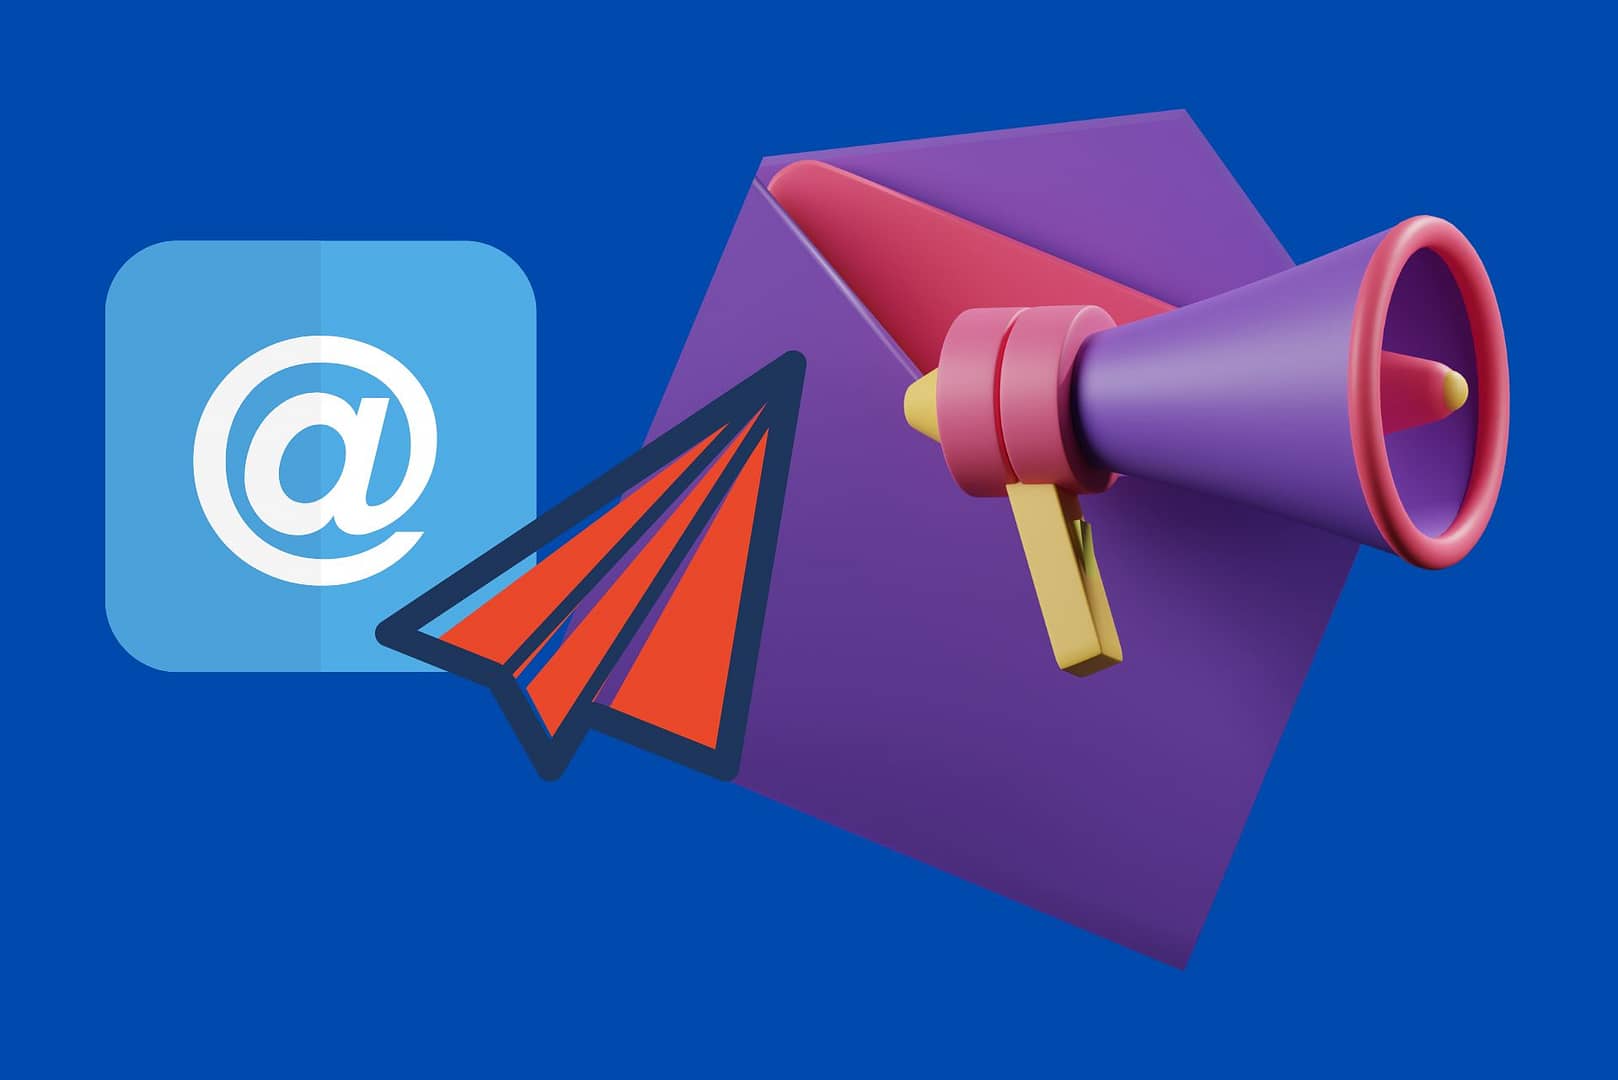 email marketing esempi per iniziare una campagna di email marketing efficiente